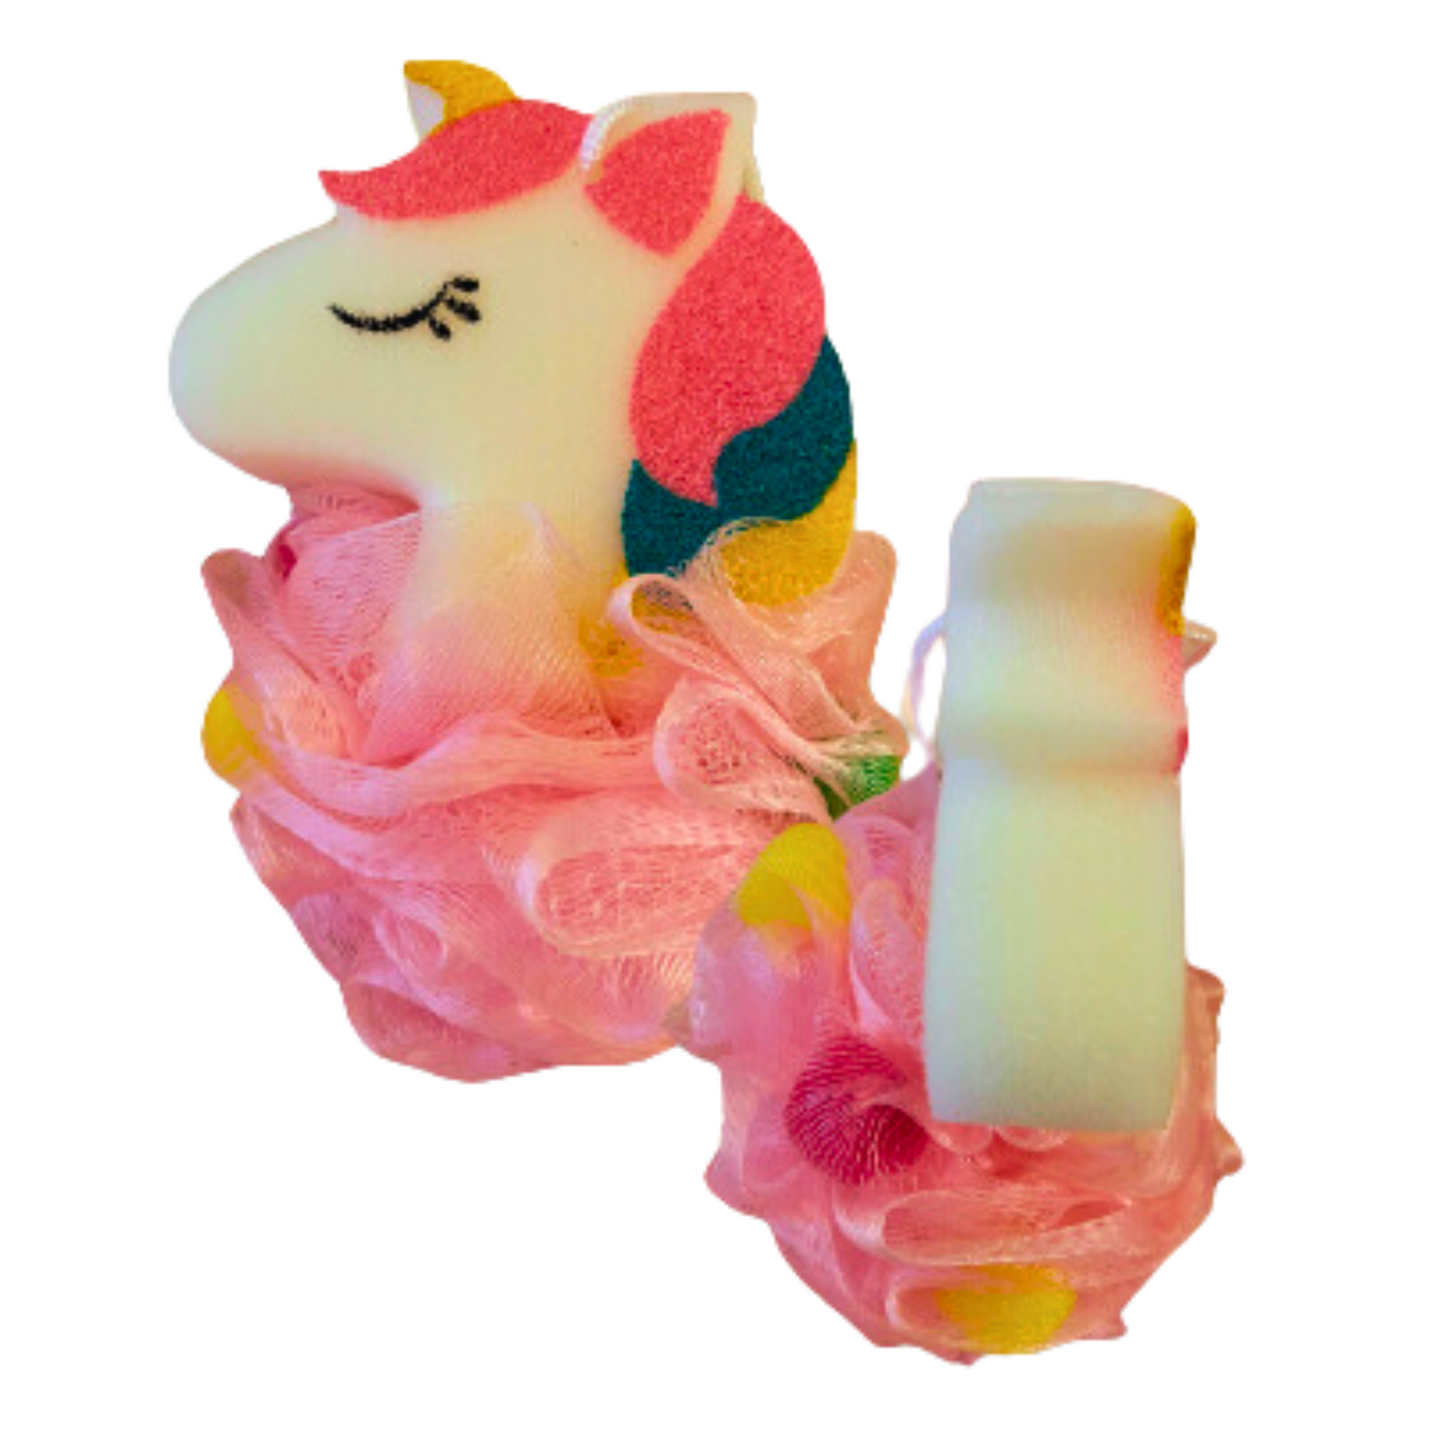 Cute Unicorn Shaped Loofah Bath Sponge, Pink Loofah Exfoliating Mesh Shower Ball Sponge Bath Accessories